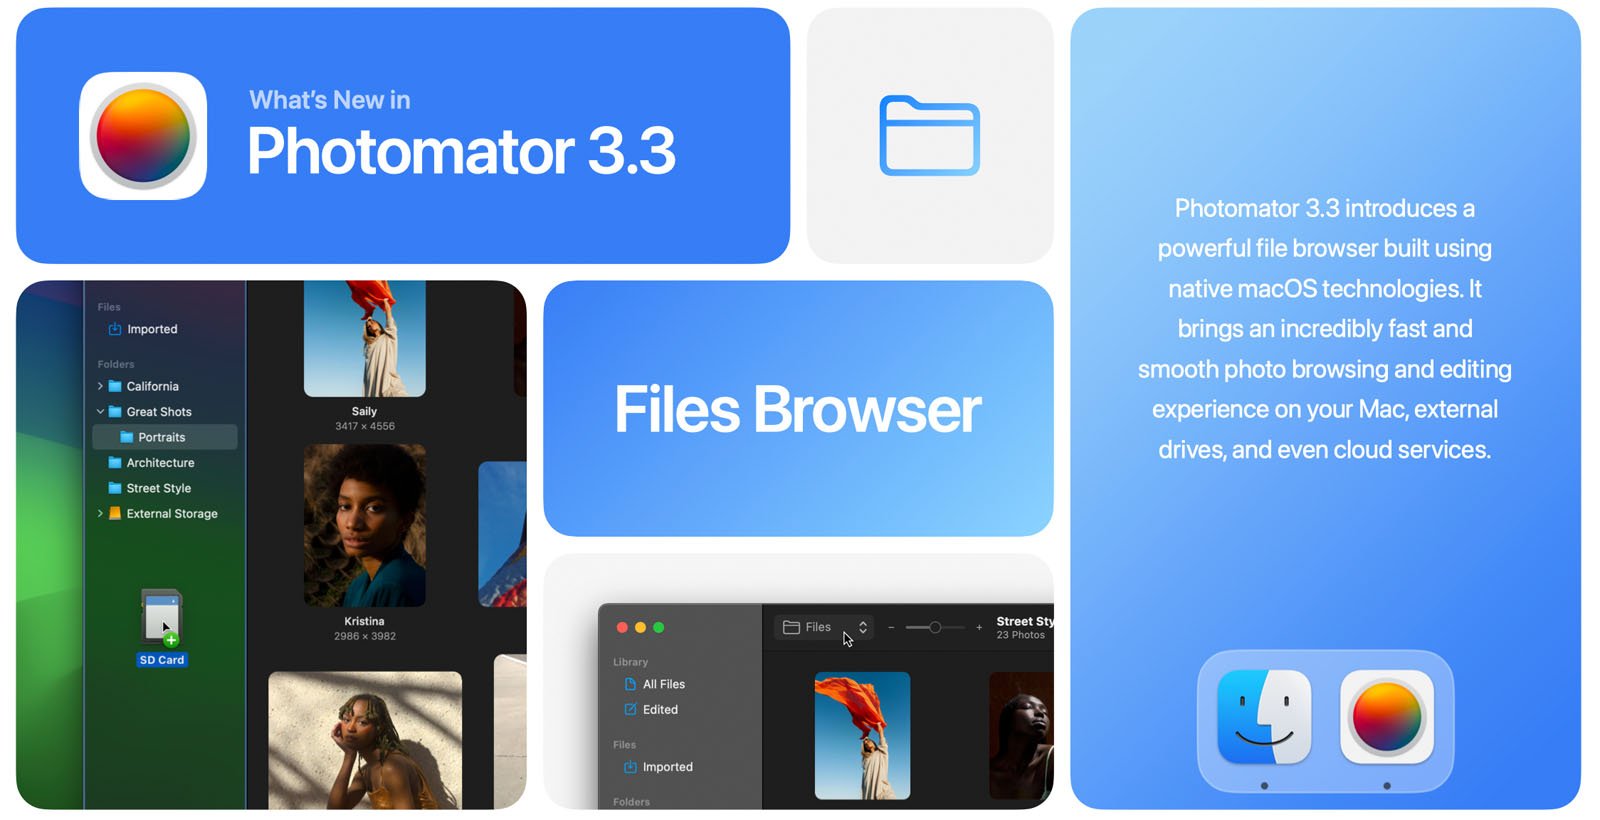 Pixelmator Photomator 3.3 update released, adds file explorer editing functionality 